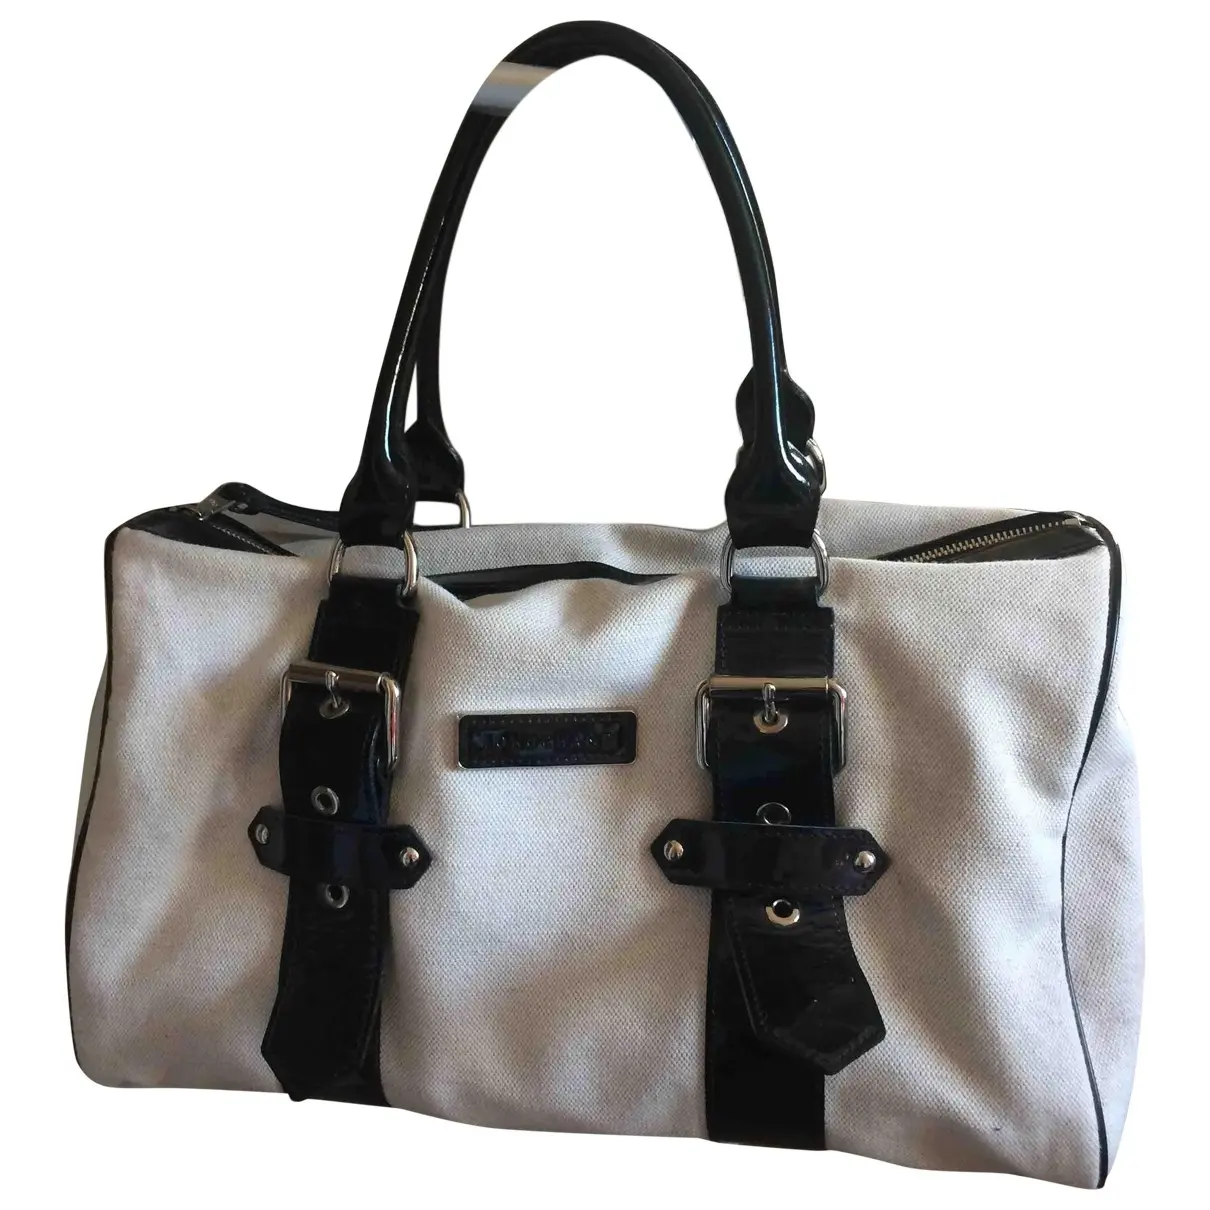 Kate Moss handbag Longchamp